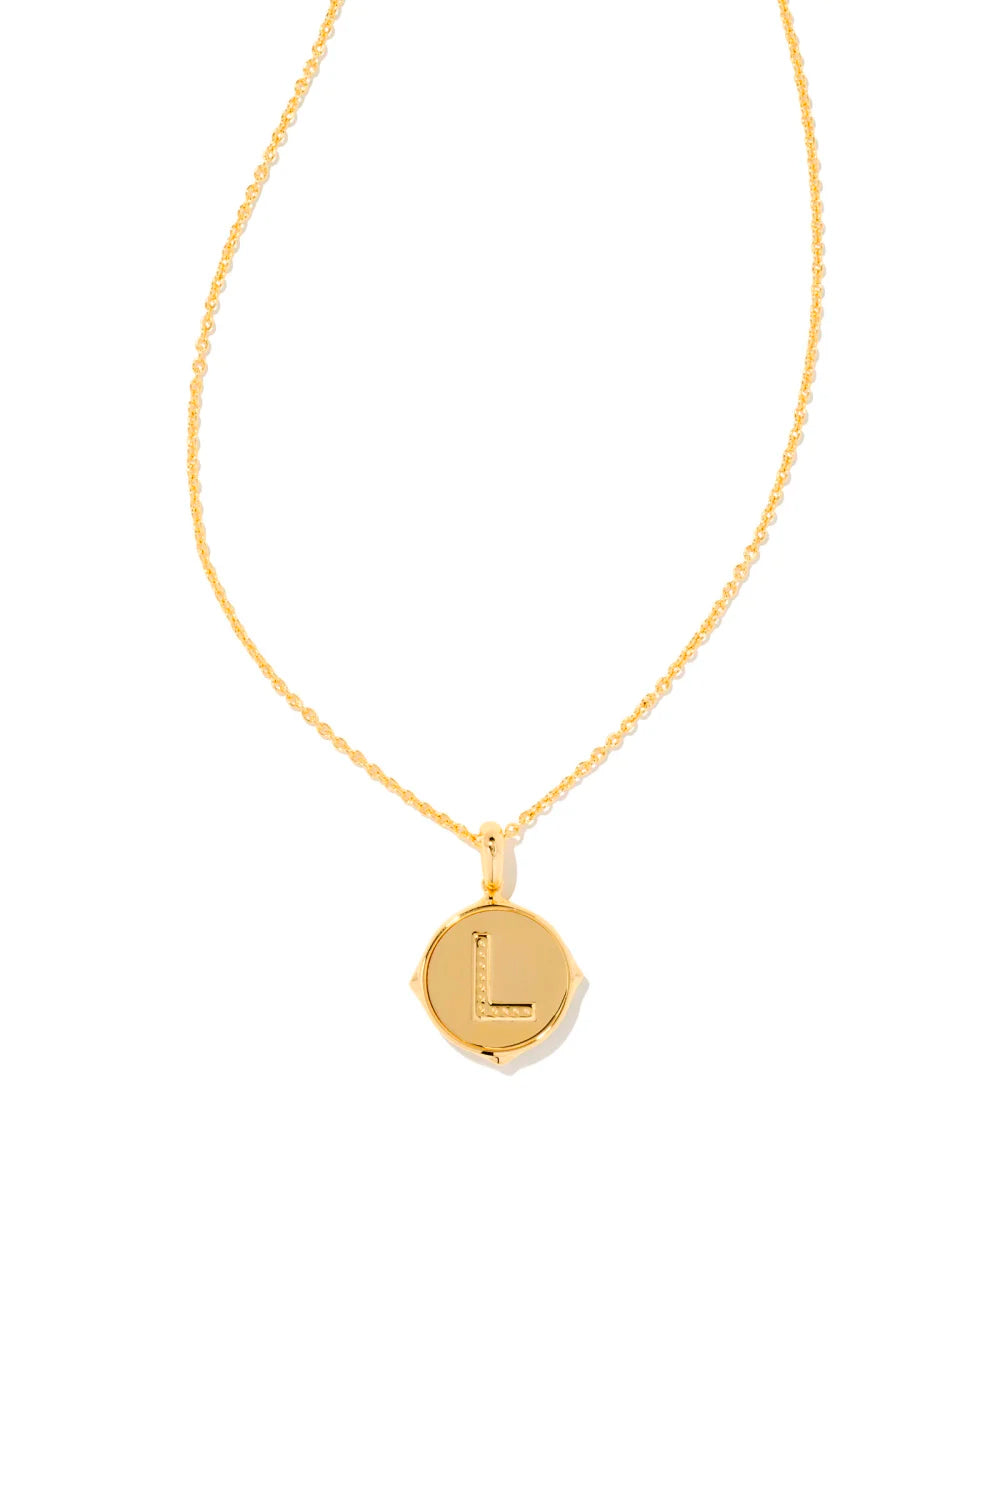 Letter N Pendant Necklace in Gold | Kendra Scott